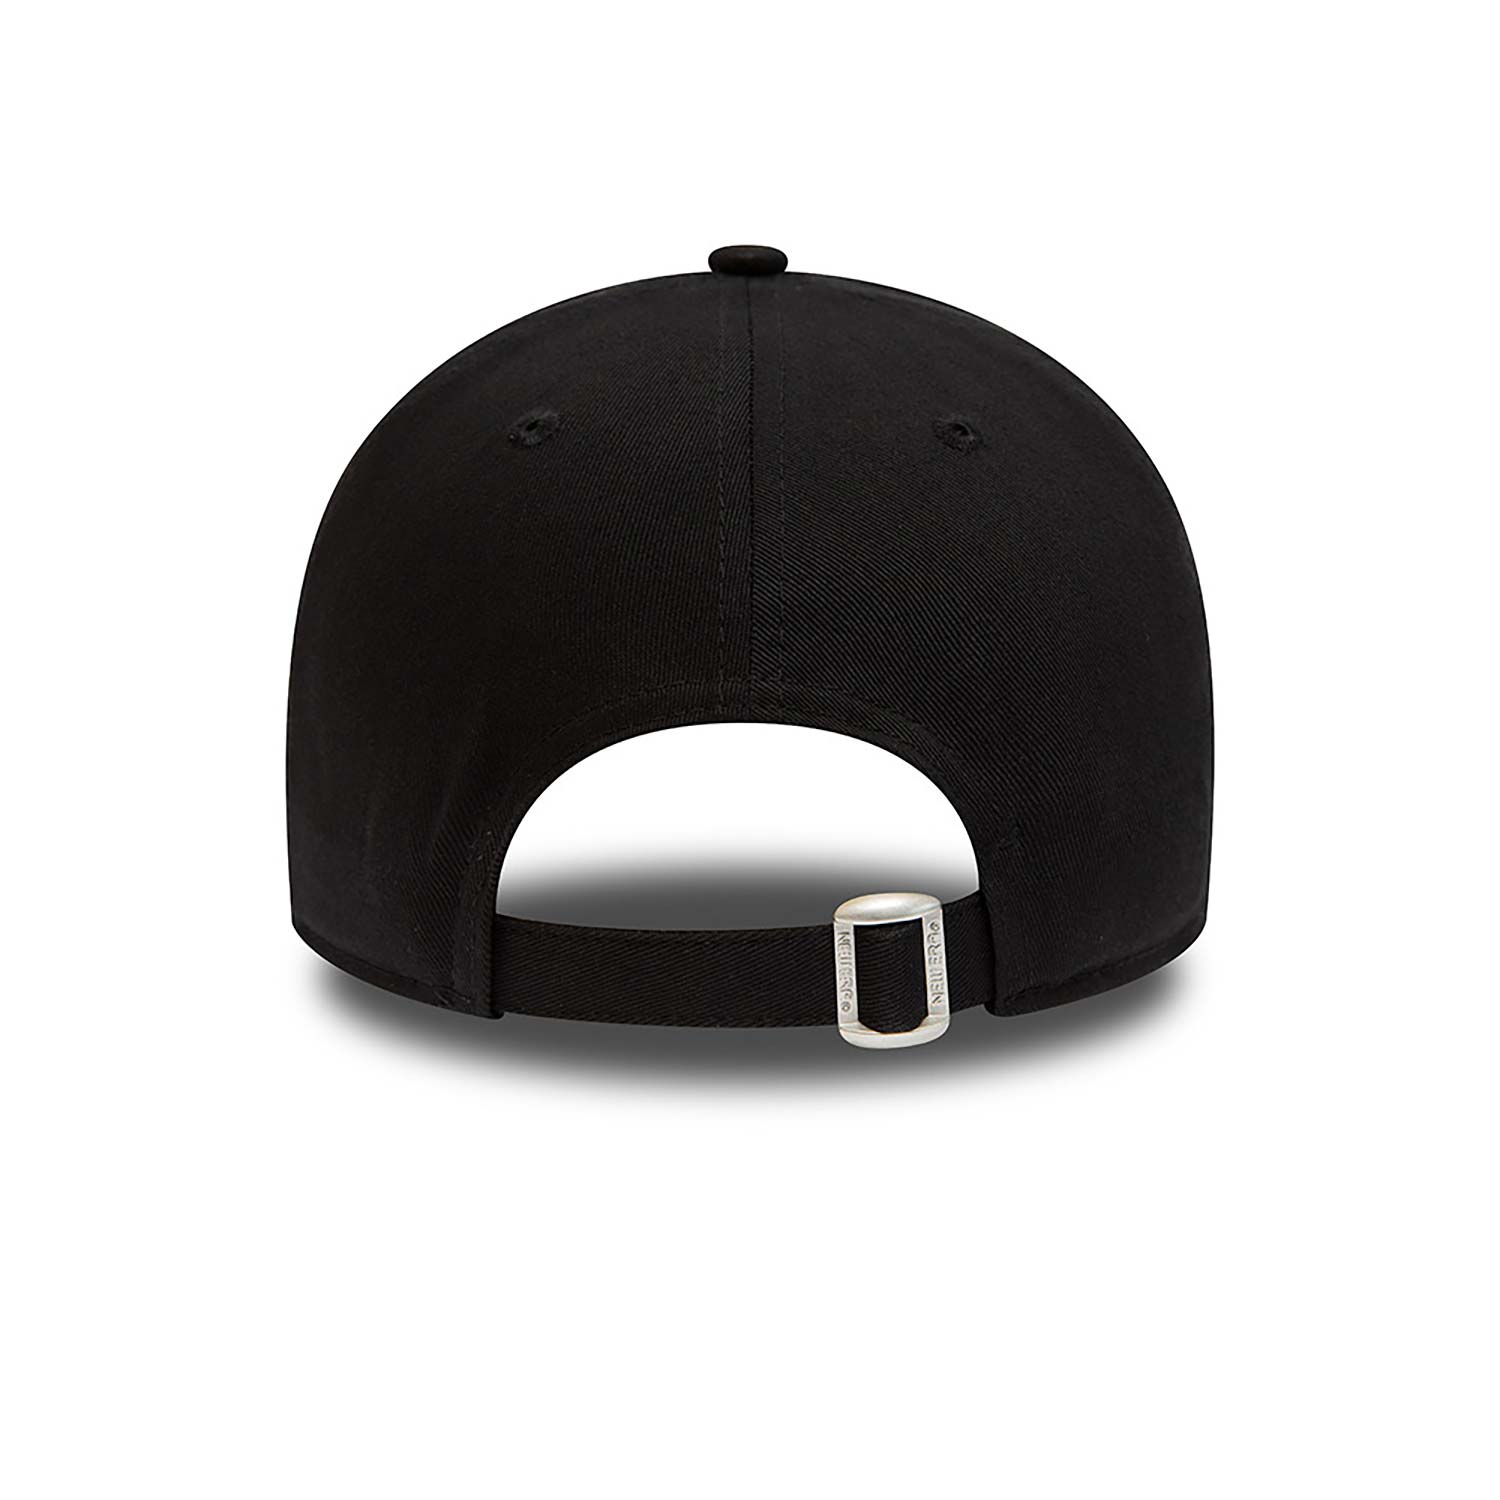 New York Yankees Repreve League Essential Black 9FORTY Adjustable Cap